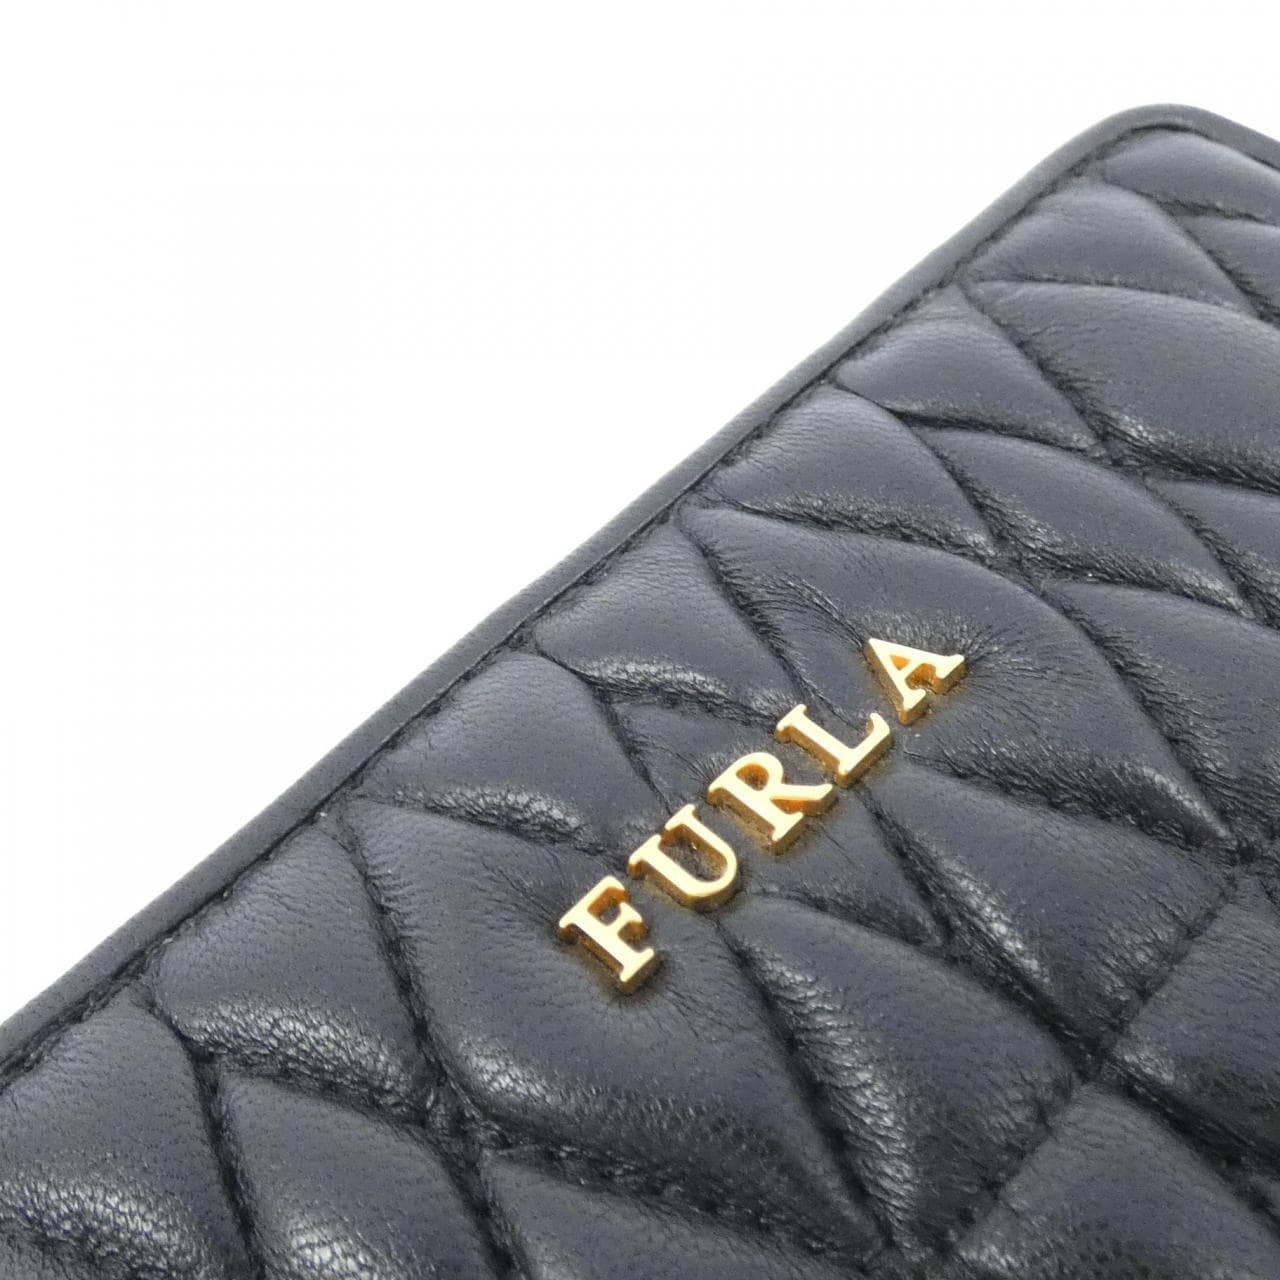 [BRAND NEW] FURLA COMETA PAV4 wallet